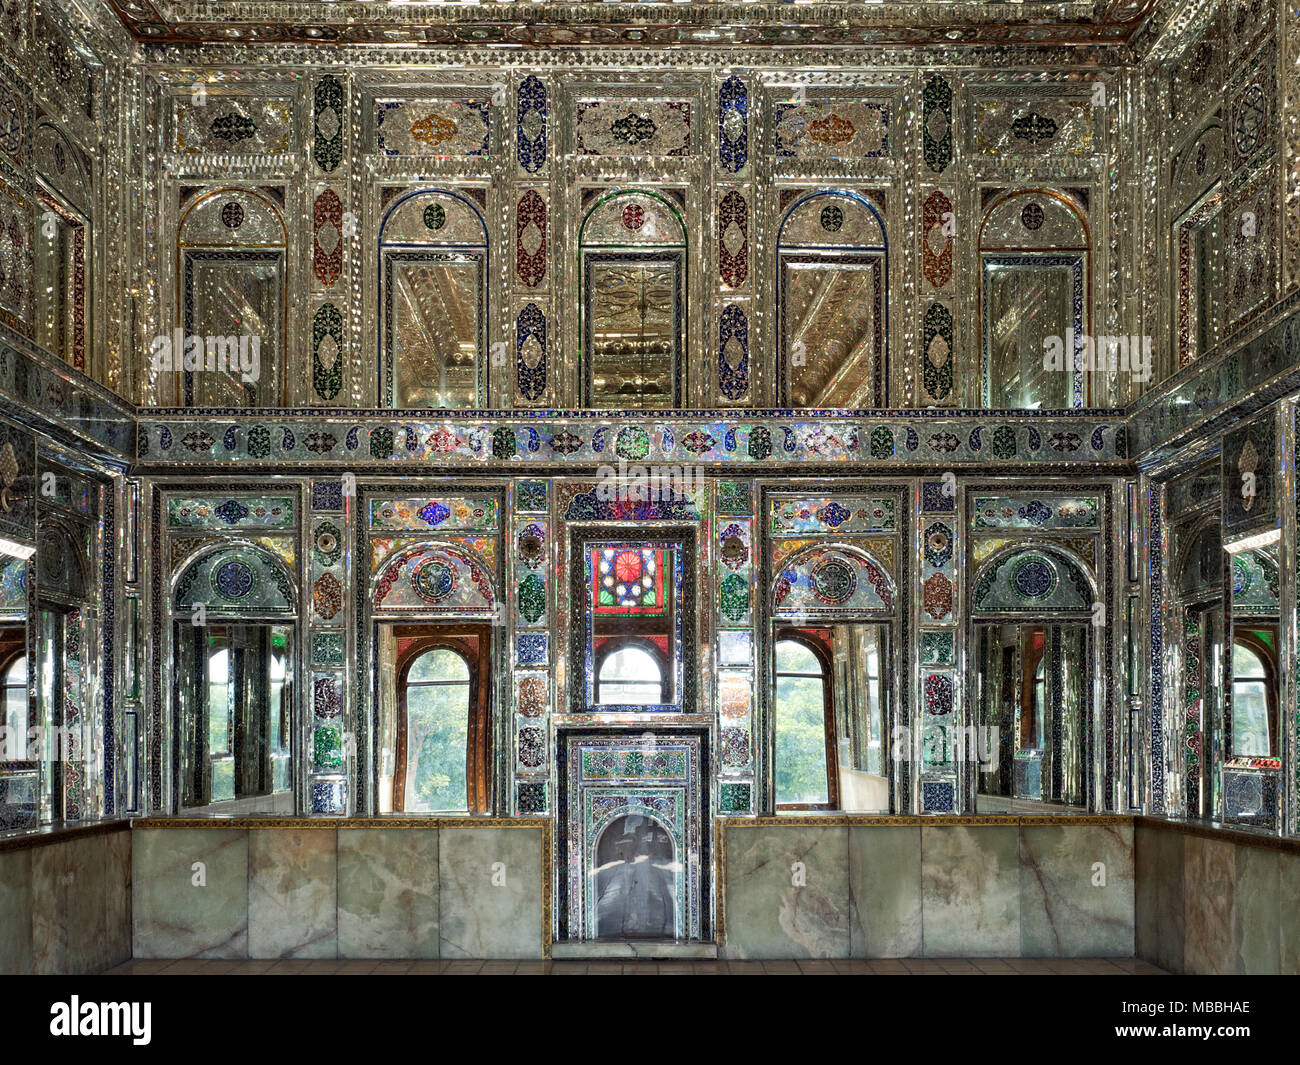 Qavam historisches Haus Interieur, Shiraz, Iran Stockfoto